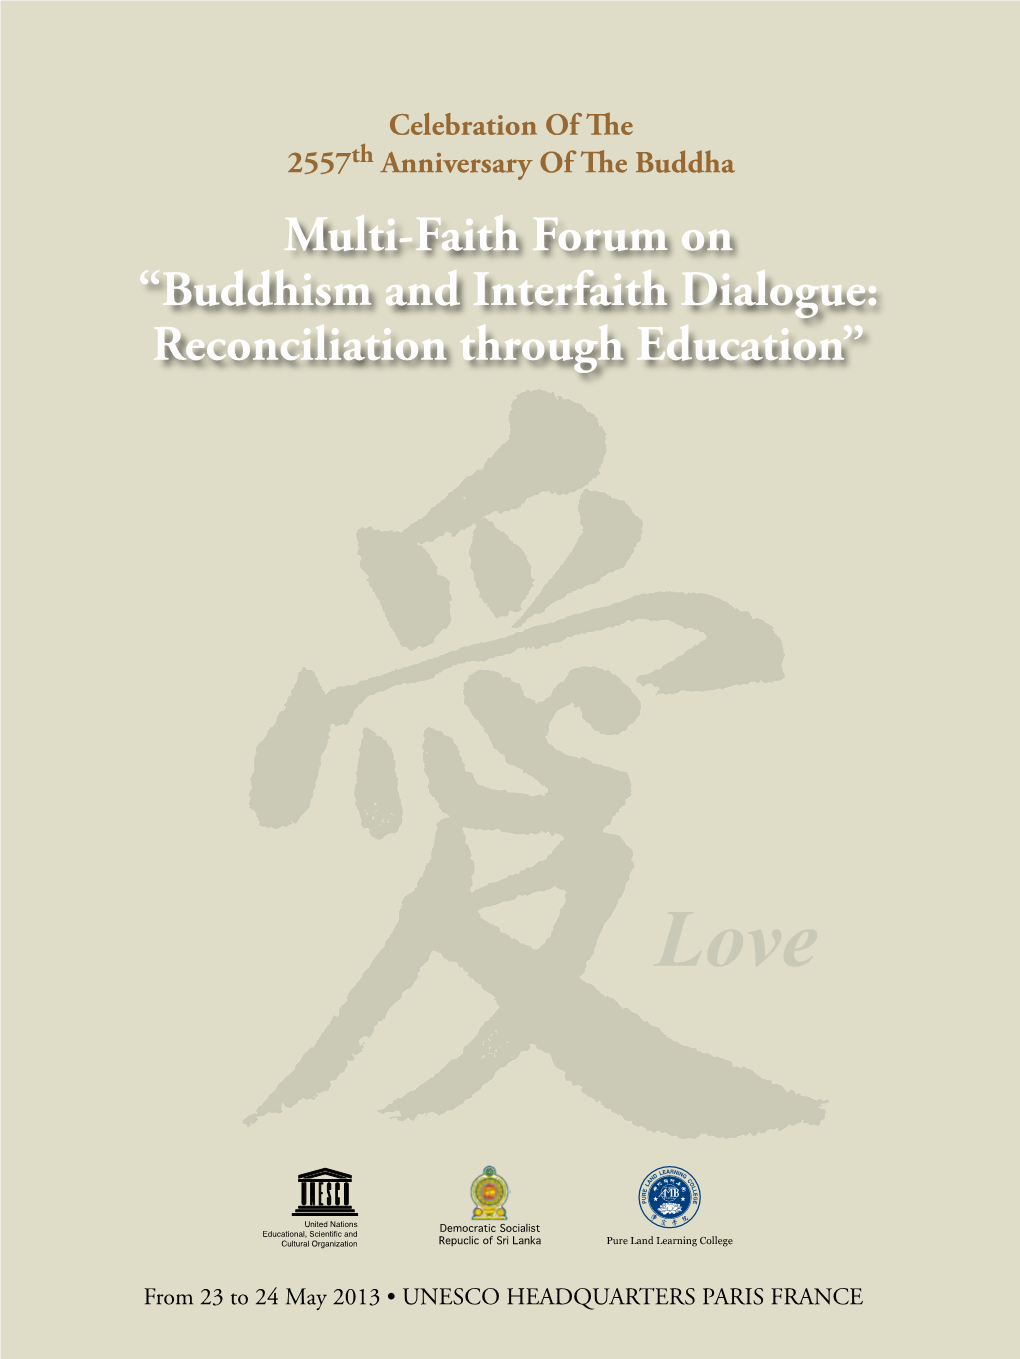 Multi-Faith Forum on “Buddhism and Interfaith Dialogue: Reconciliation Through Education”